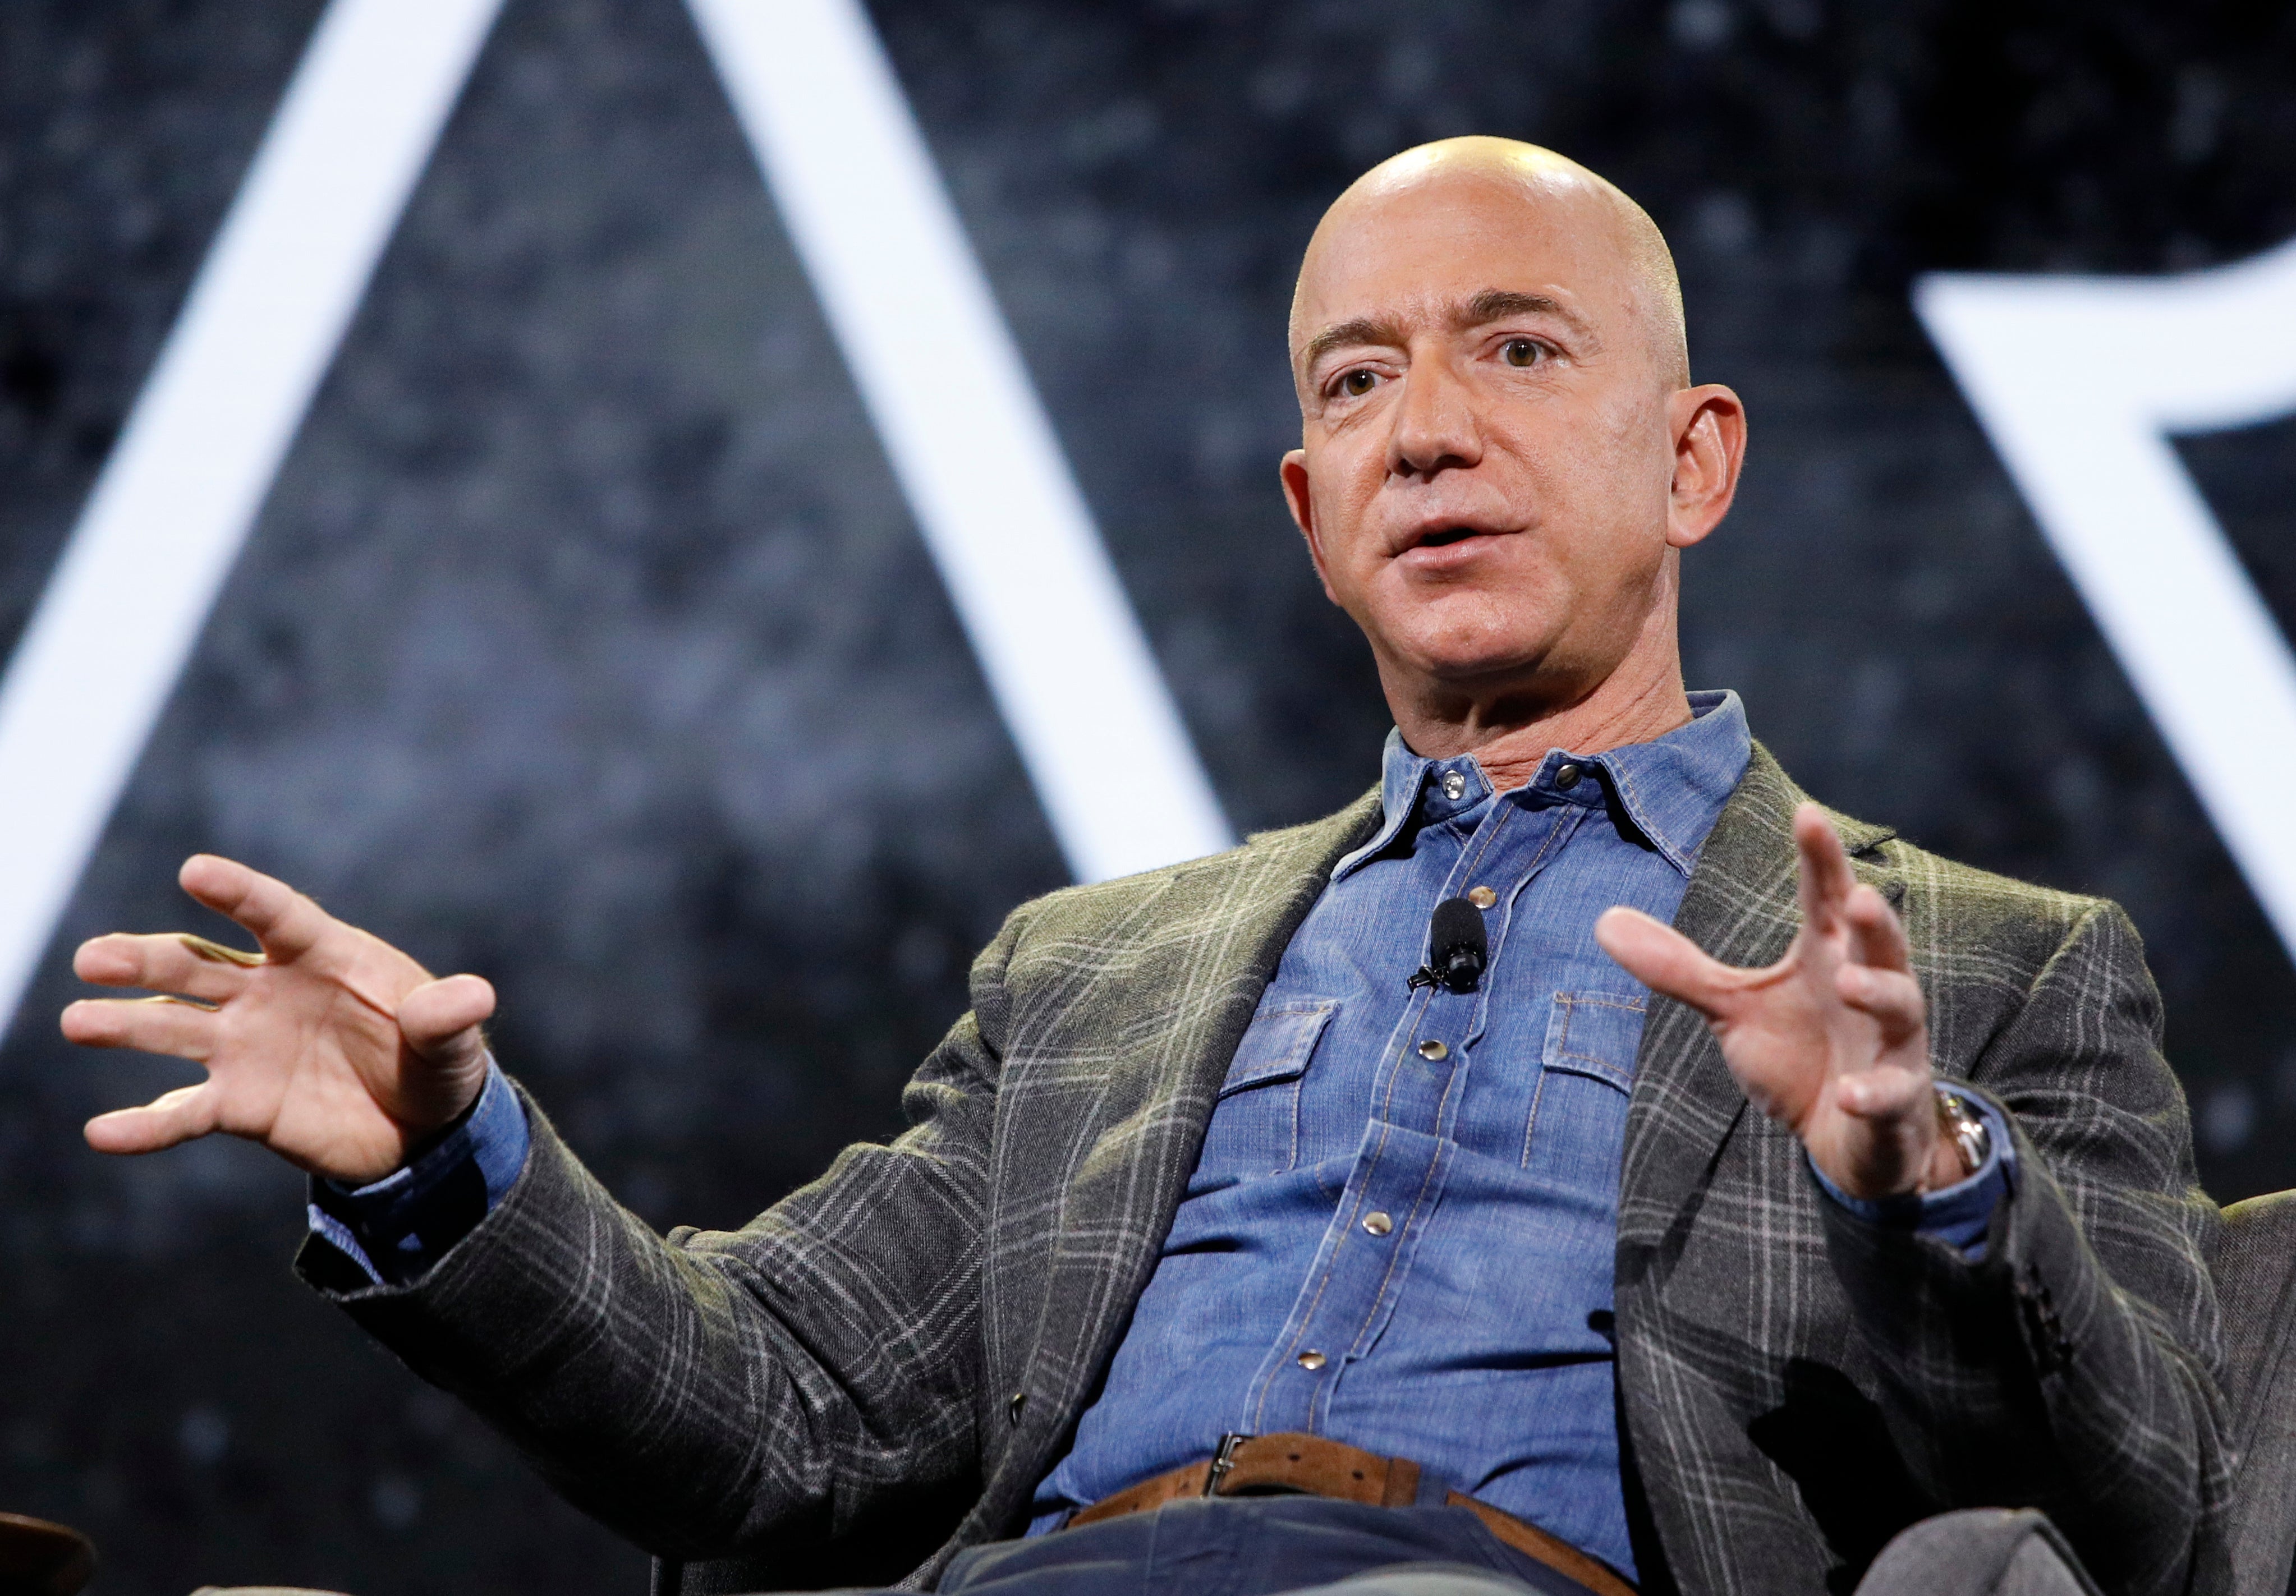 Out of pocket: Amazon founder Jeff Bezos